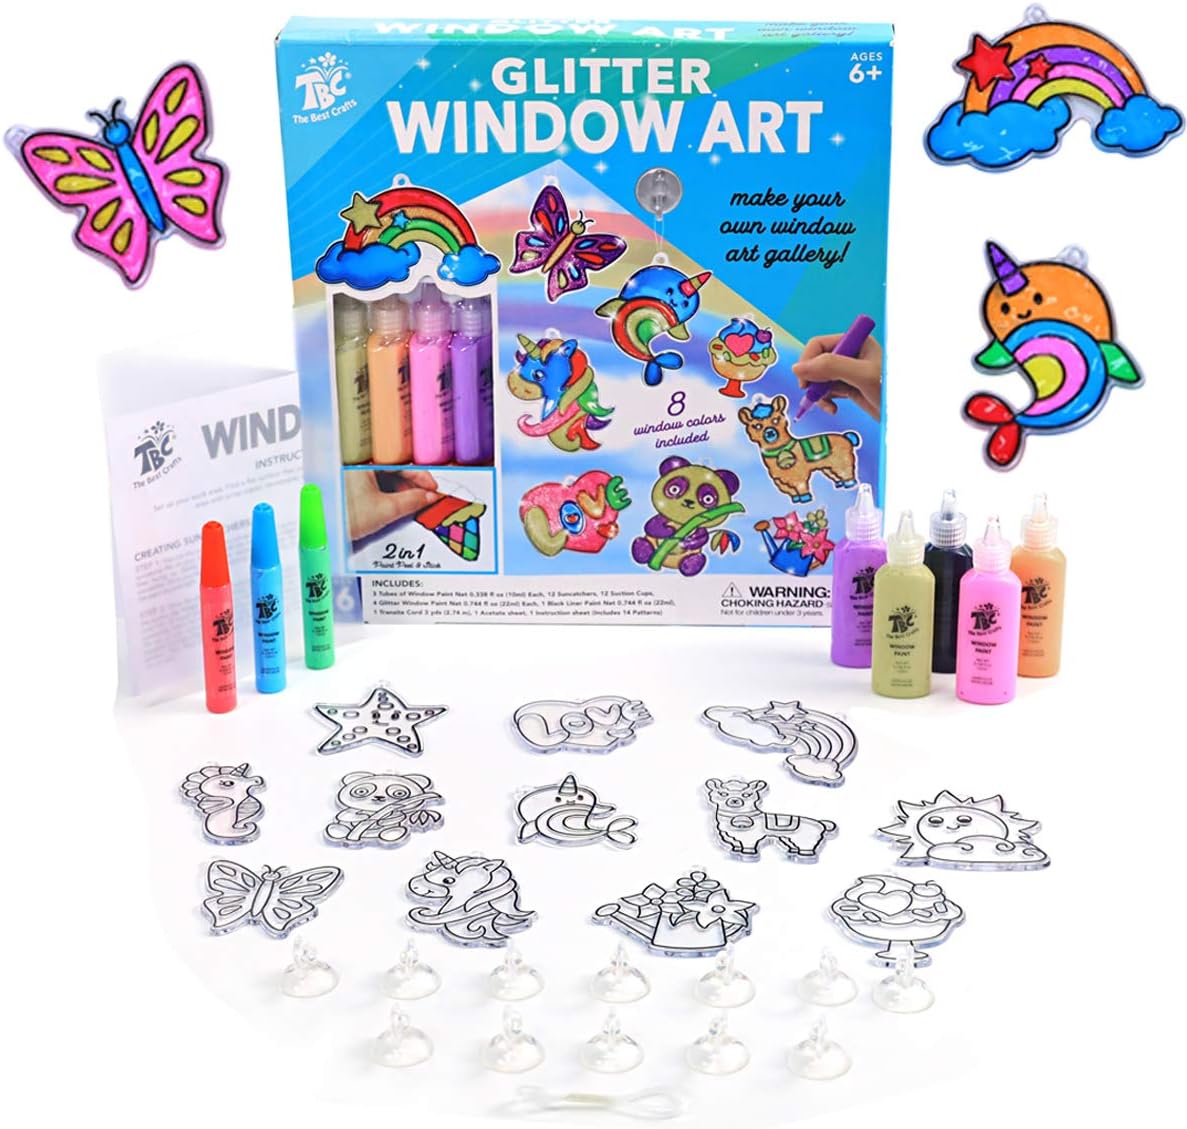 Glitter Window Art for Kids: Sparkling Creativity and Mess-Free Fun